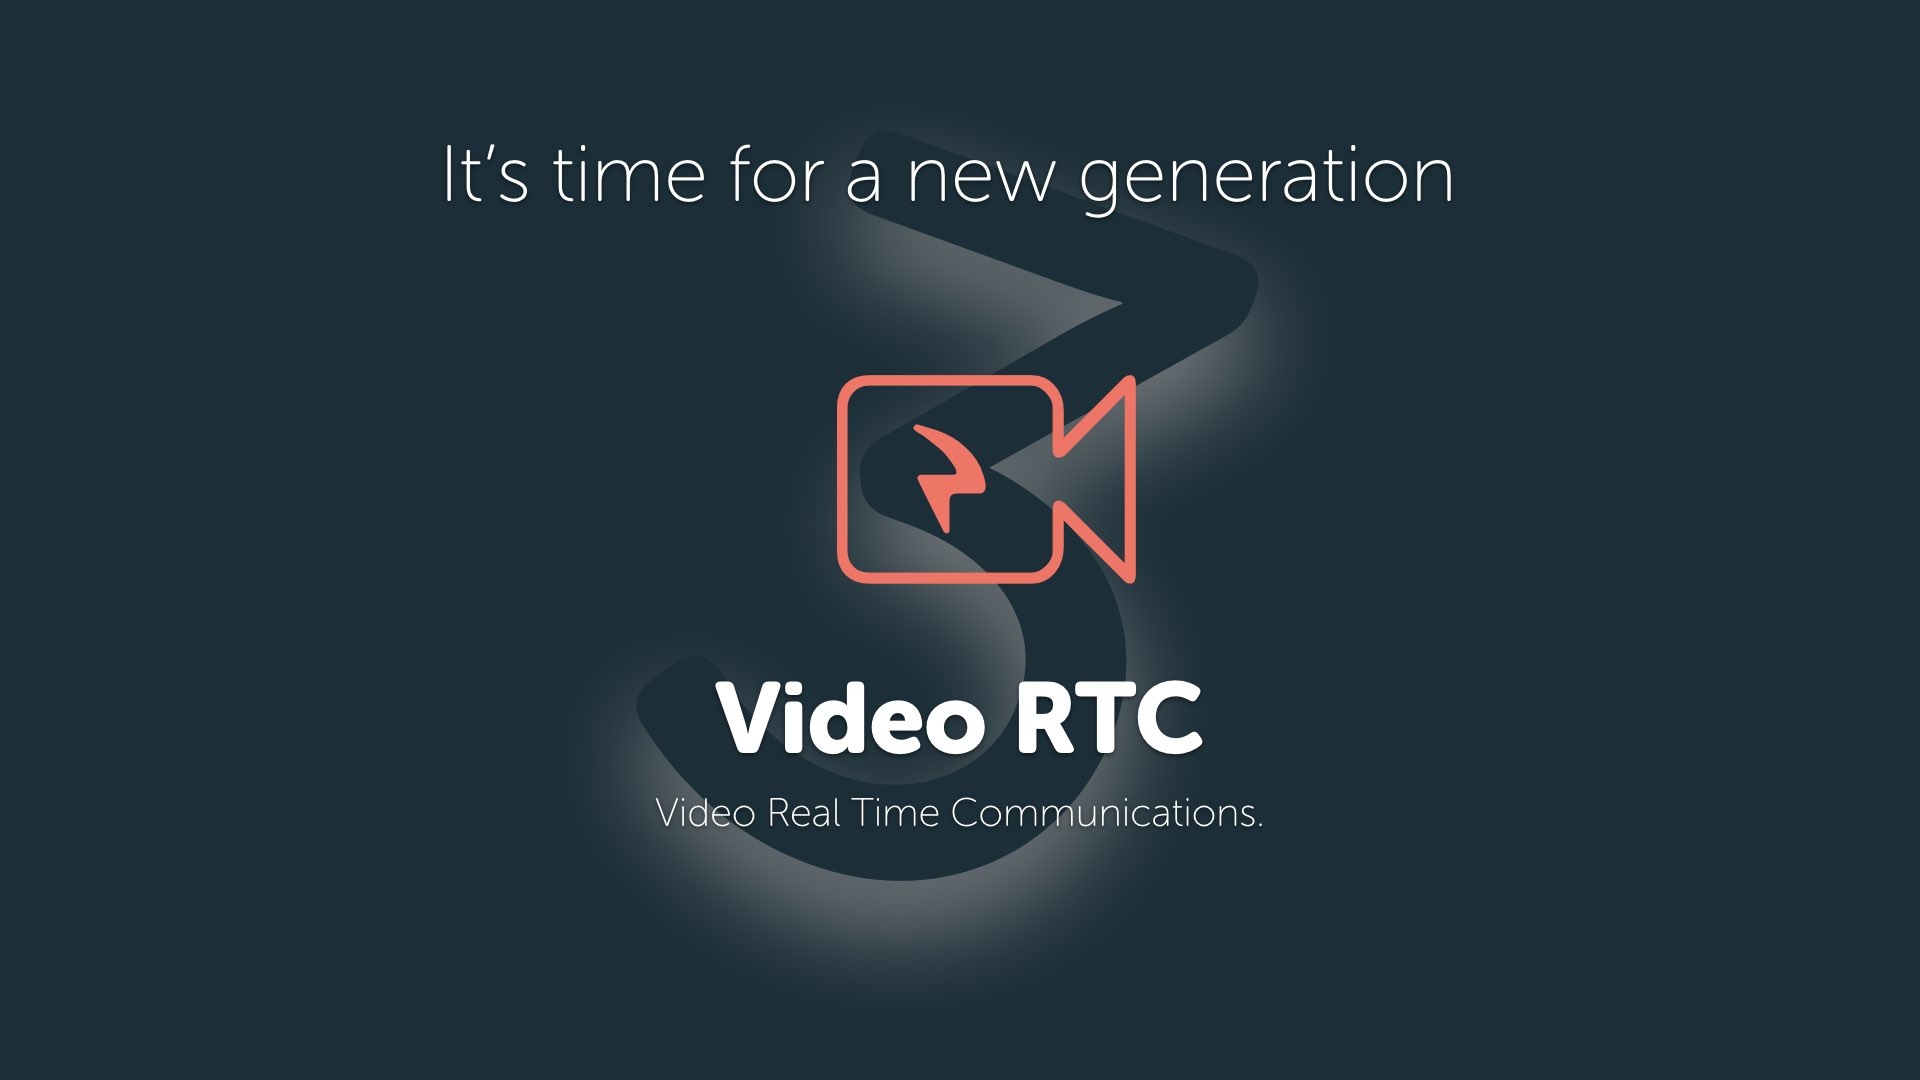 Video RTC industries